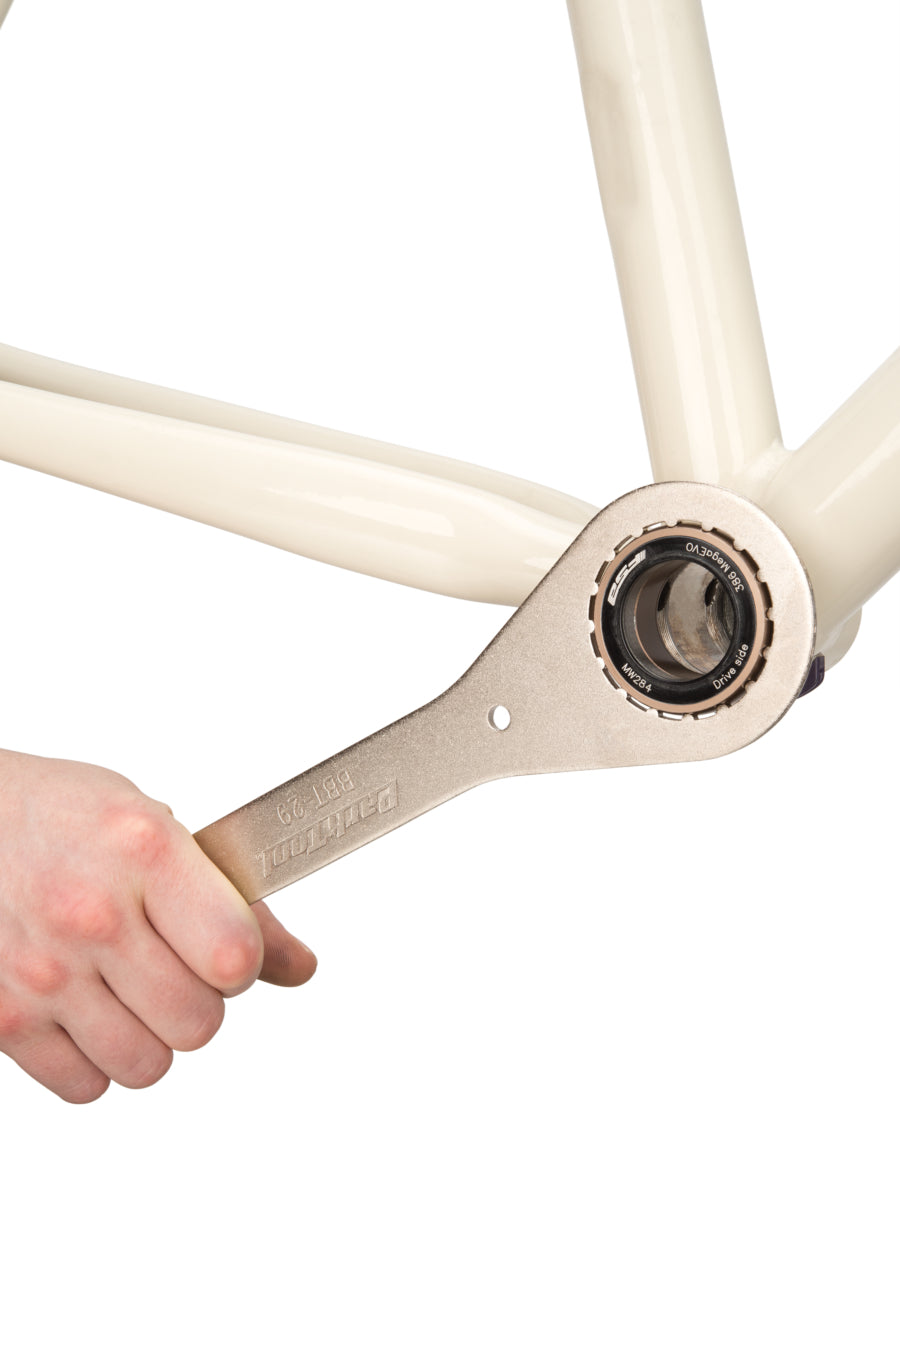 Park Tool HCW-4 Bike Crank & Bottom Bracket Wrench – Bicycle Warehouse